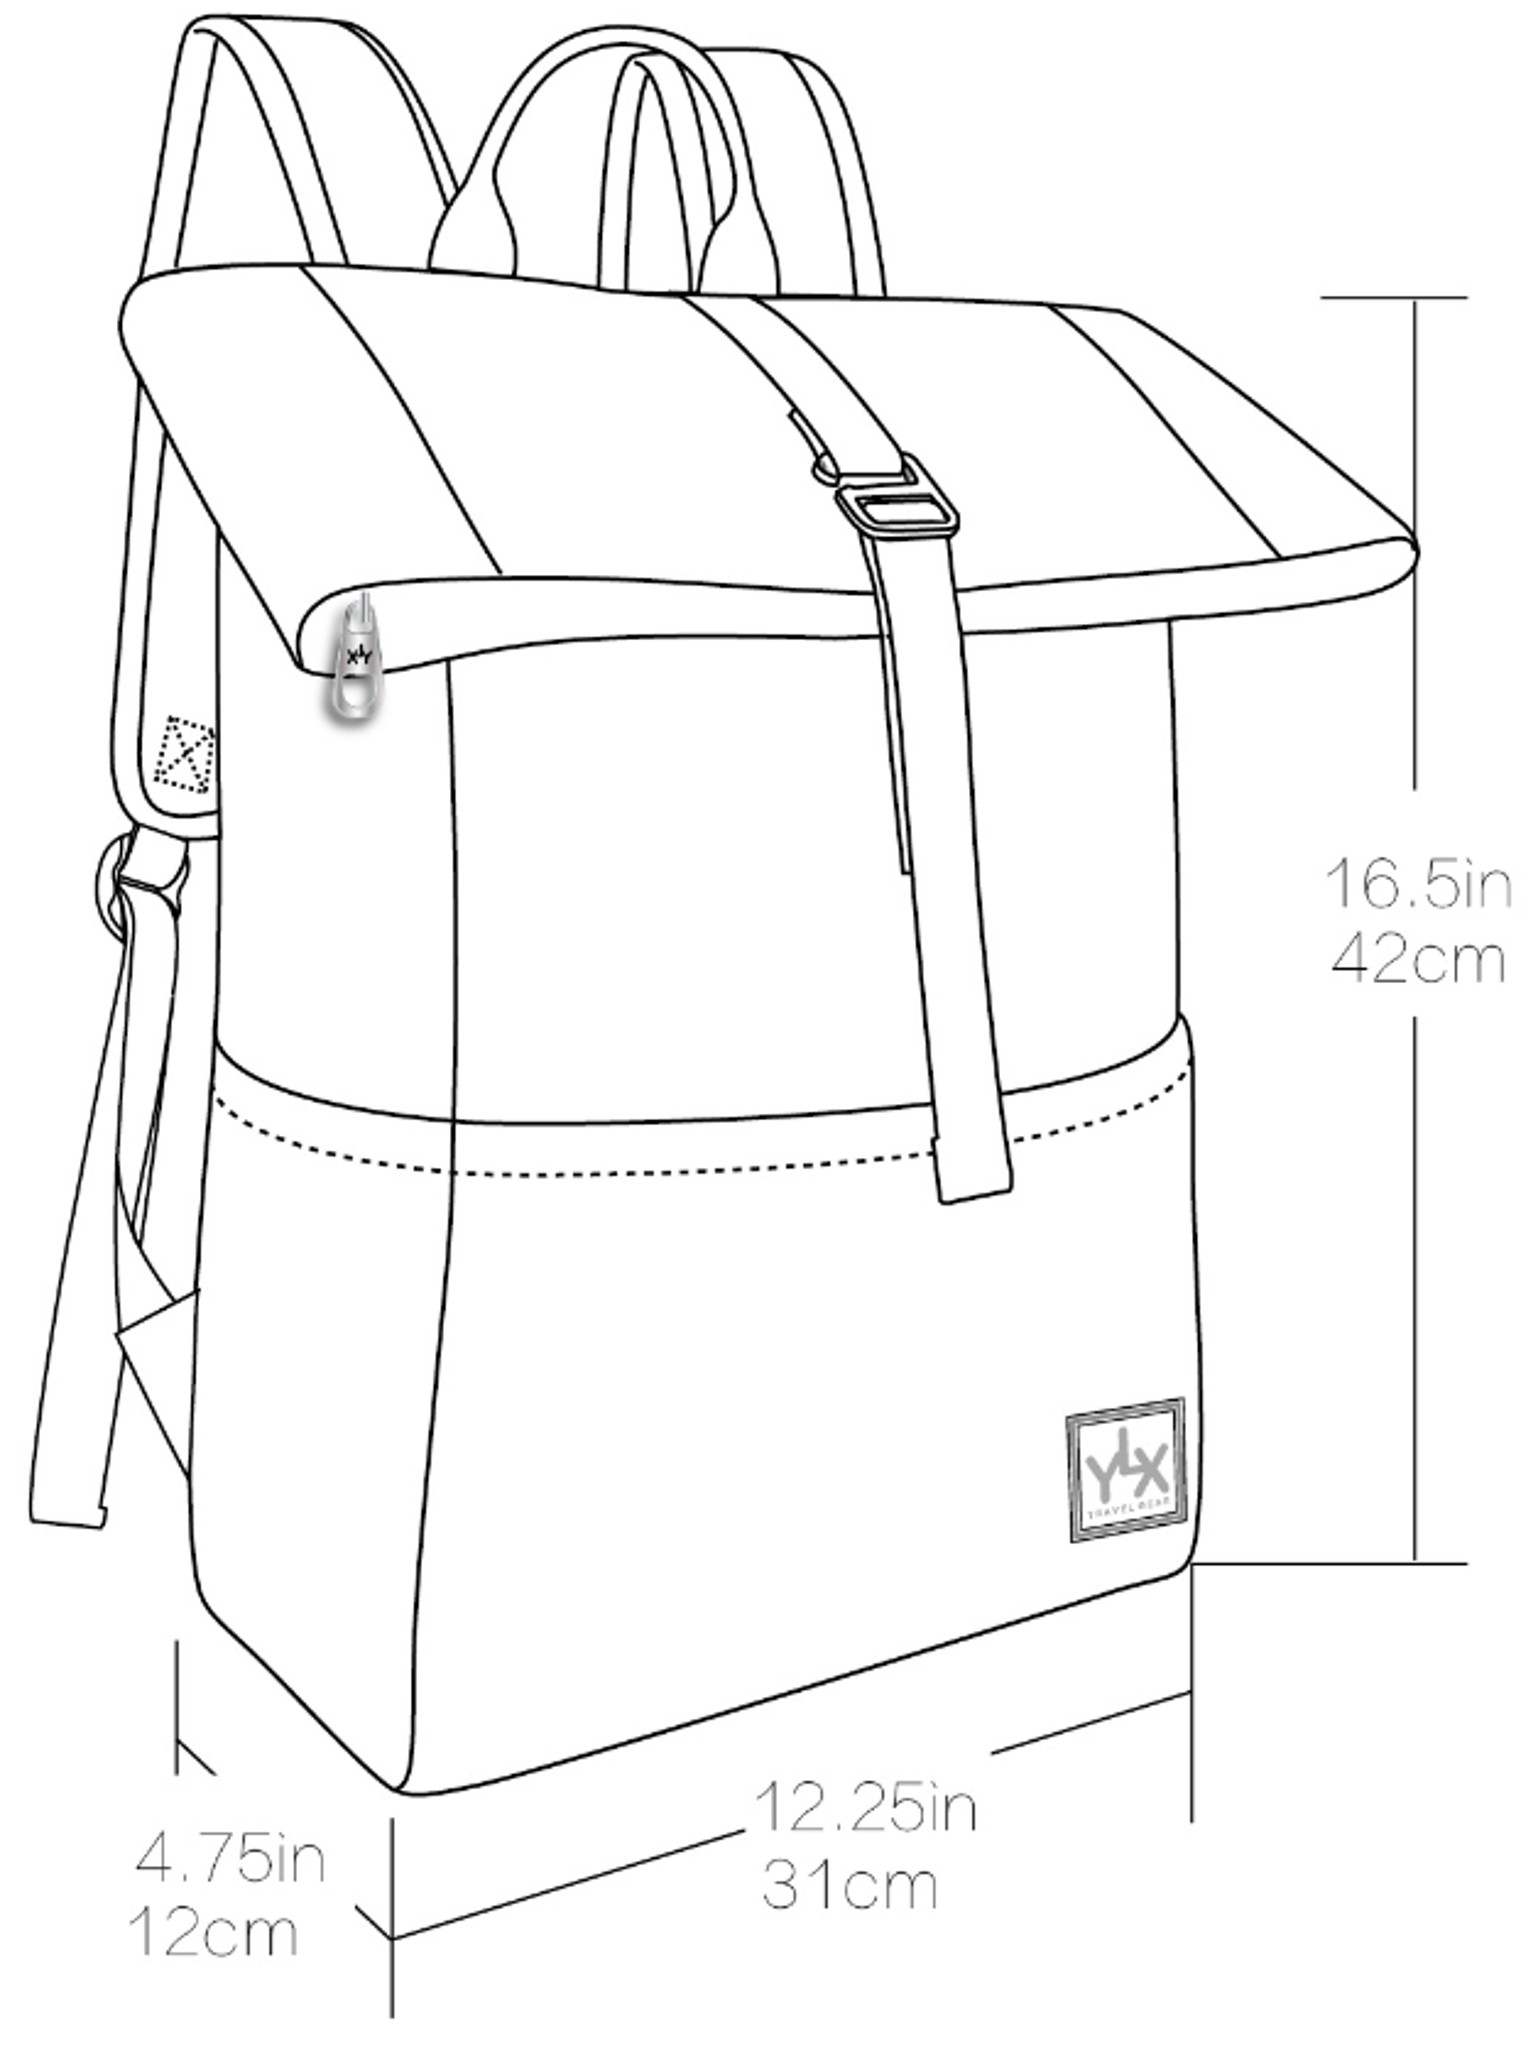 YLX Original Backpack Dimensions